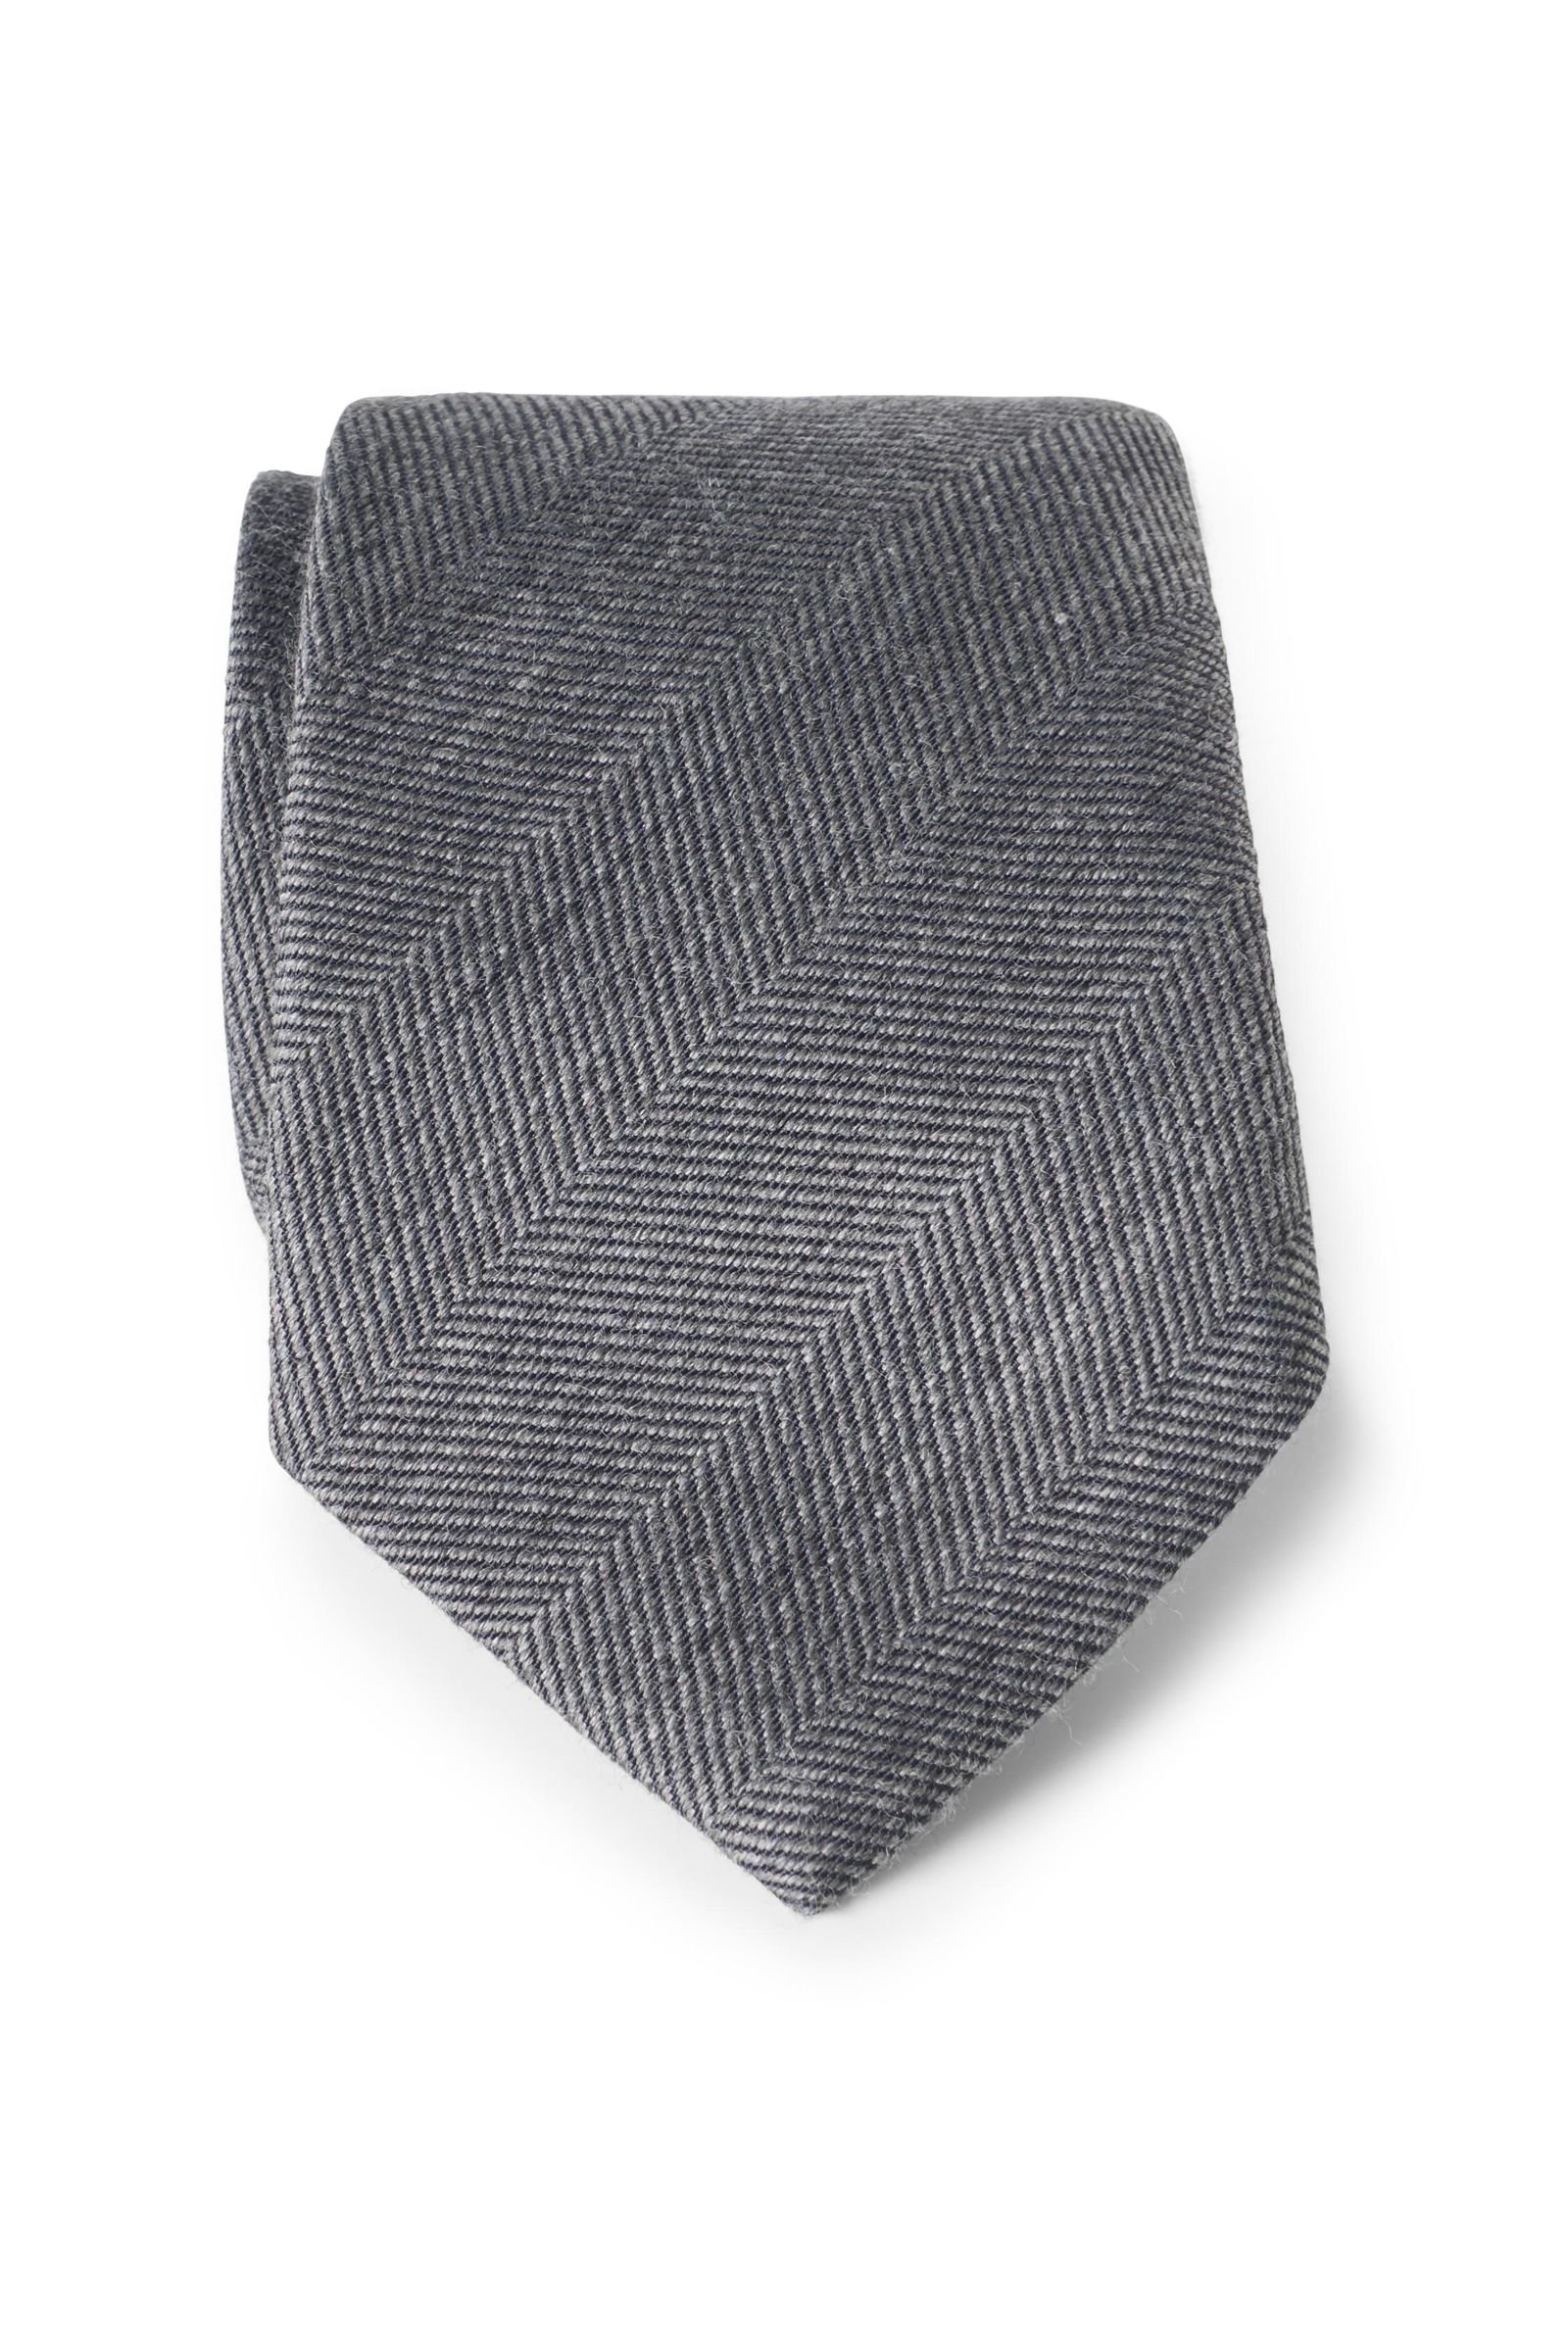 Tie dark grey